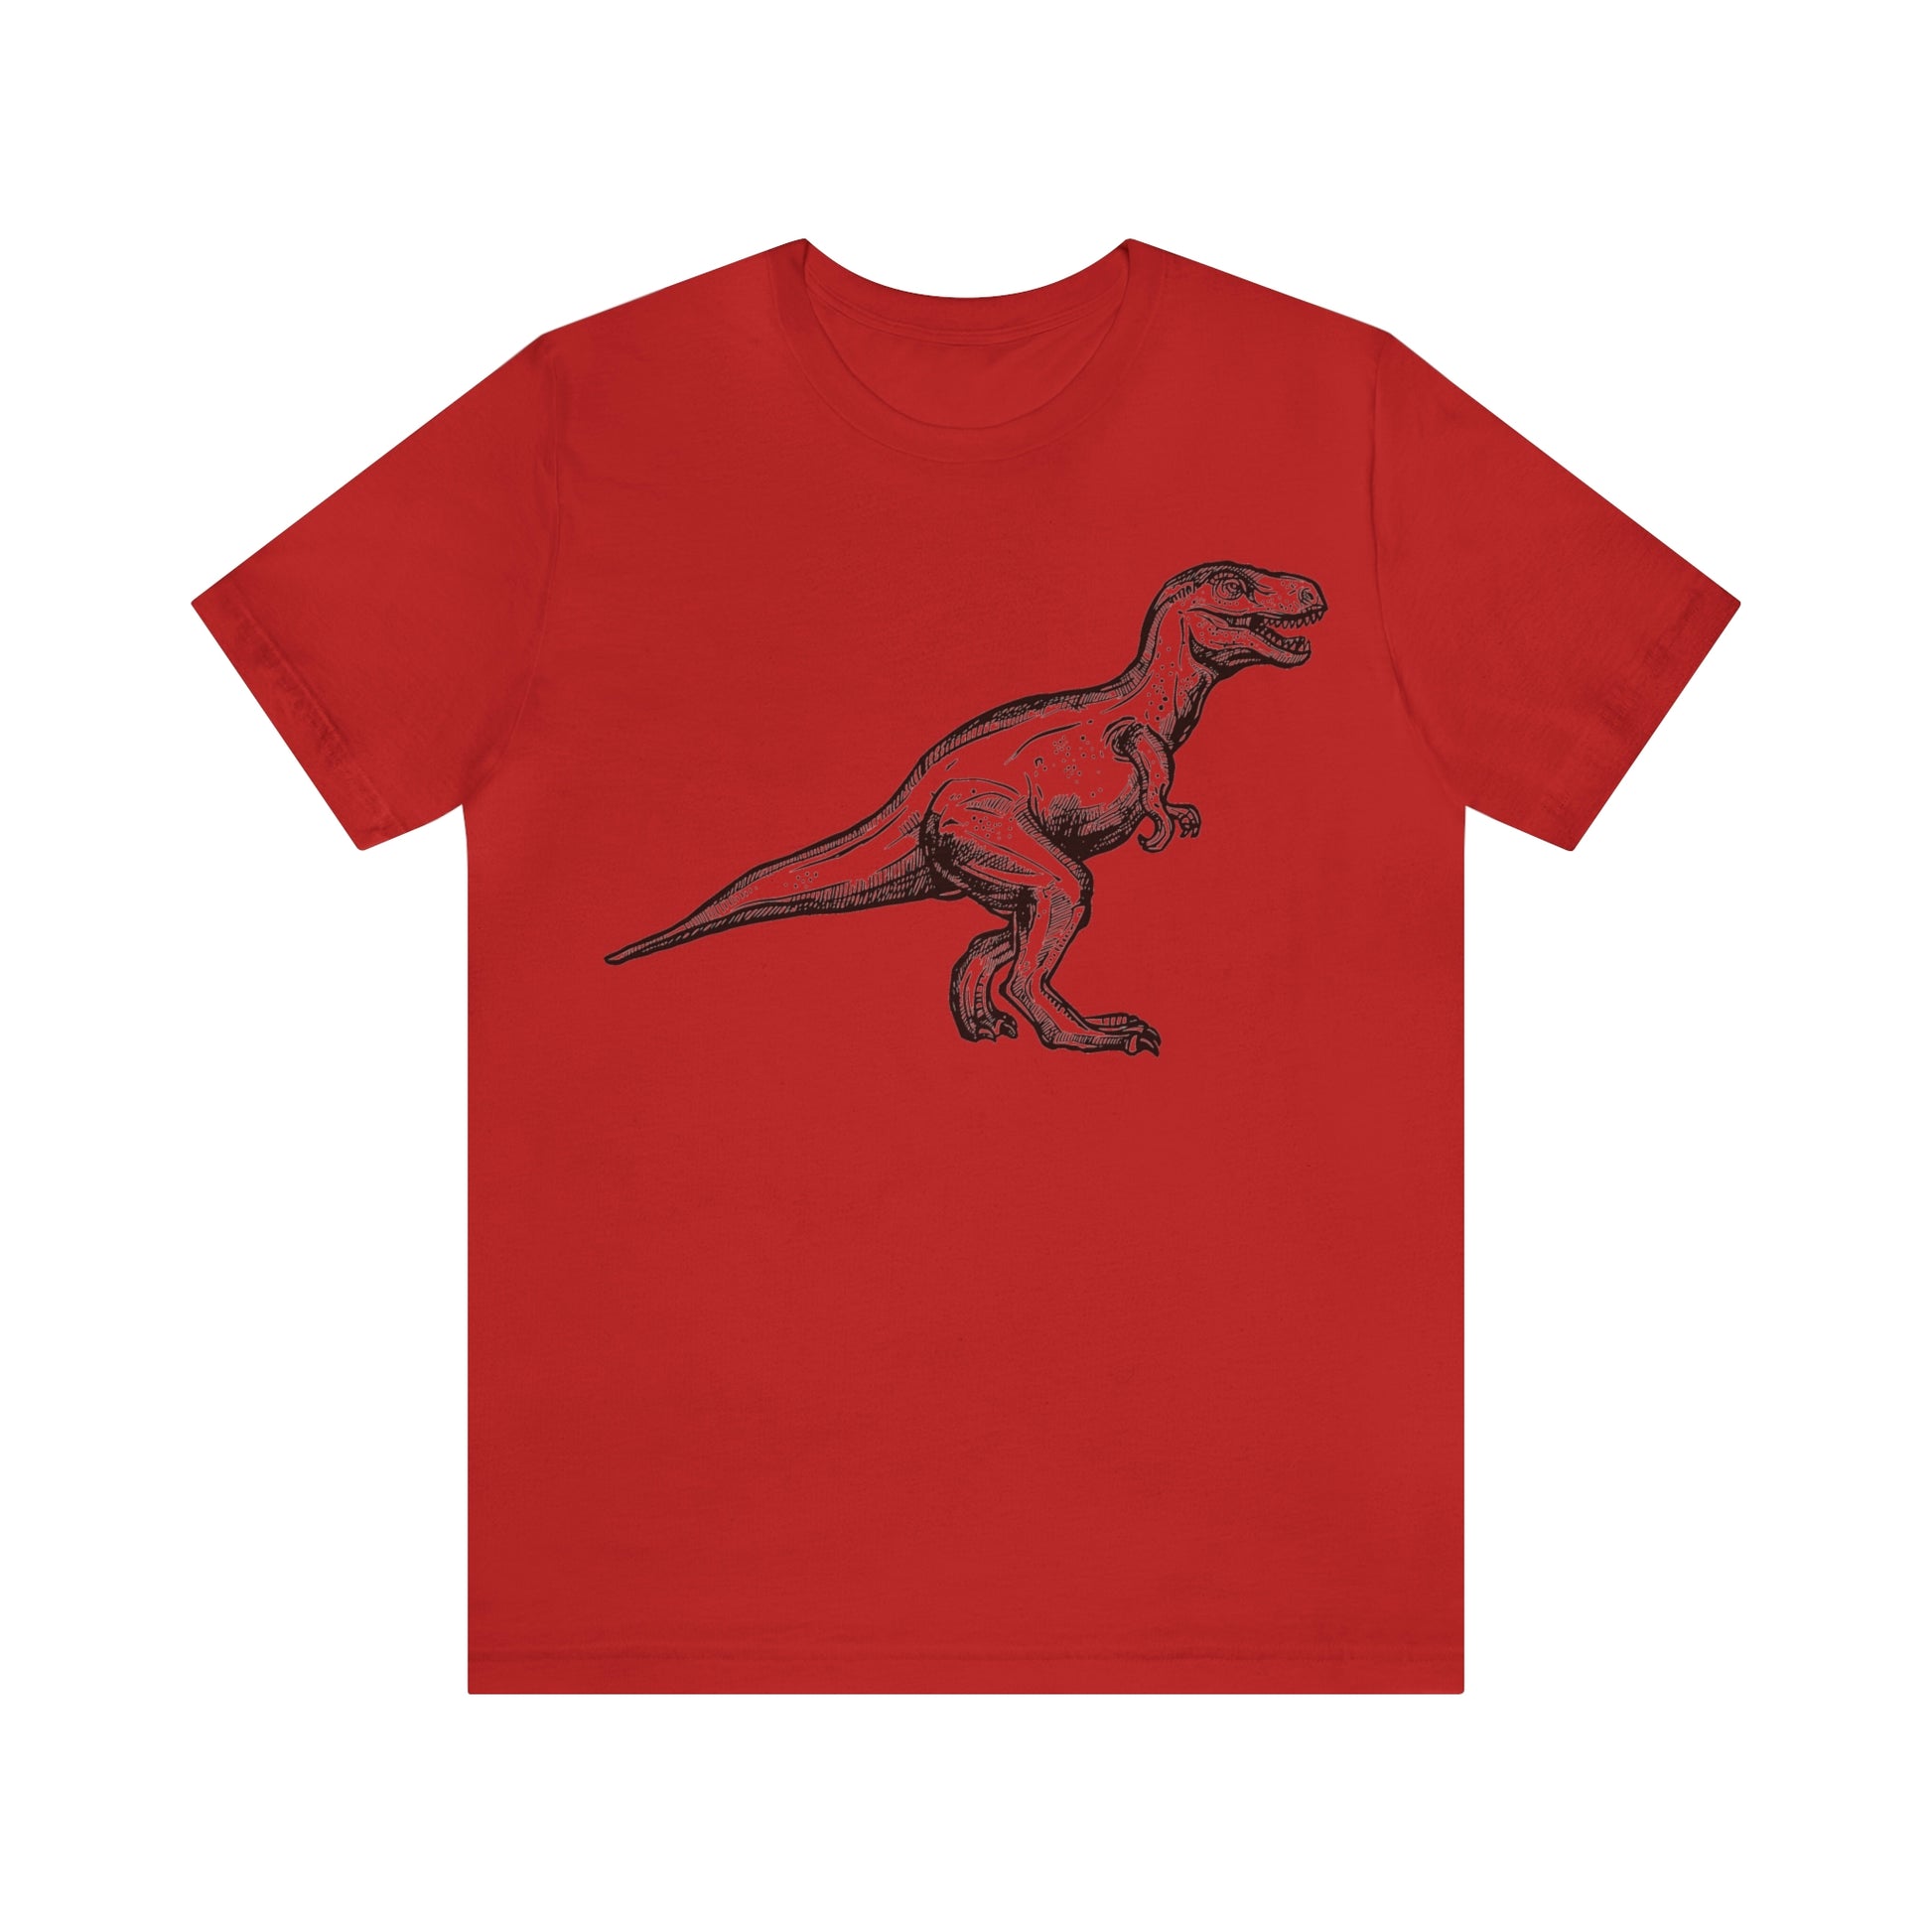 T-Rex Tshirt, Dino Dinosaur Designer Men Women Graphic Aesthetic Fashion Crewneck Tee Top Short Sleeve Shirt Starcove Fashion